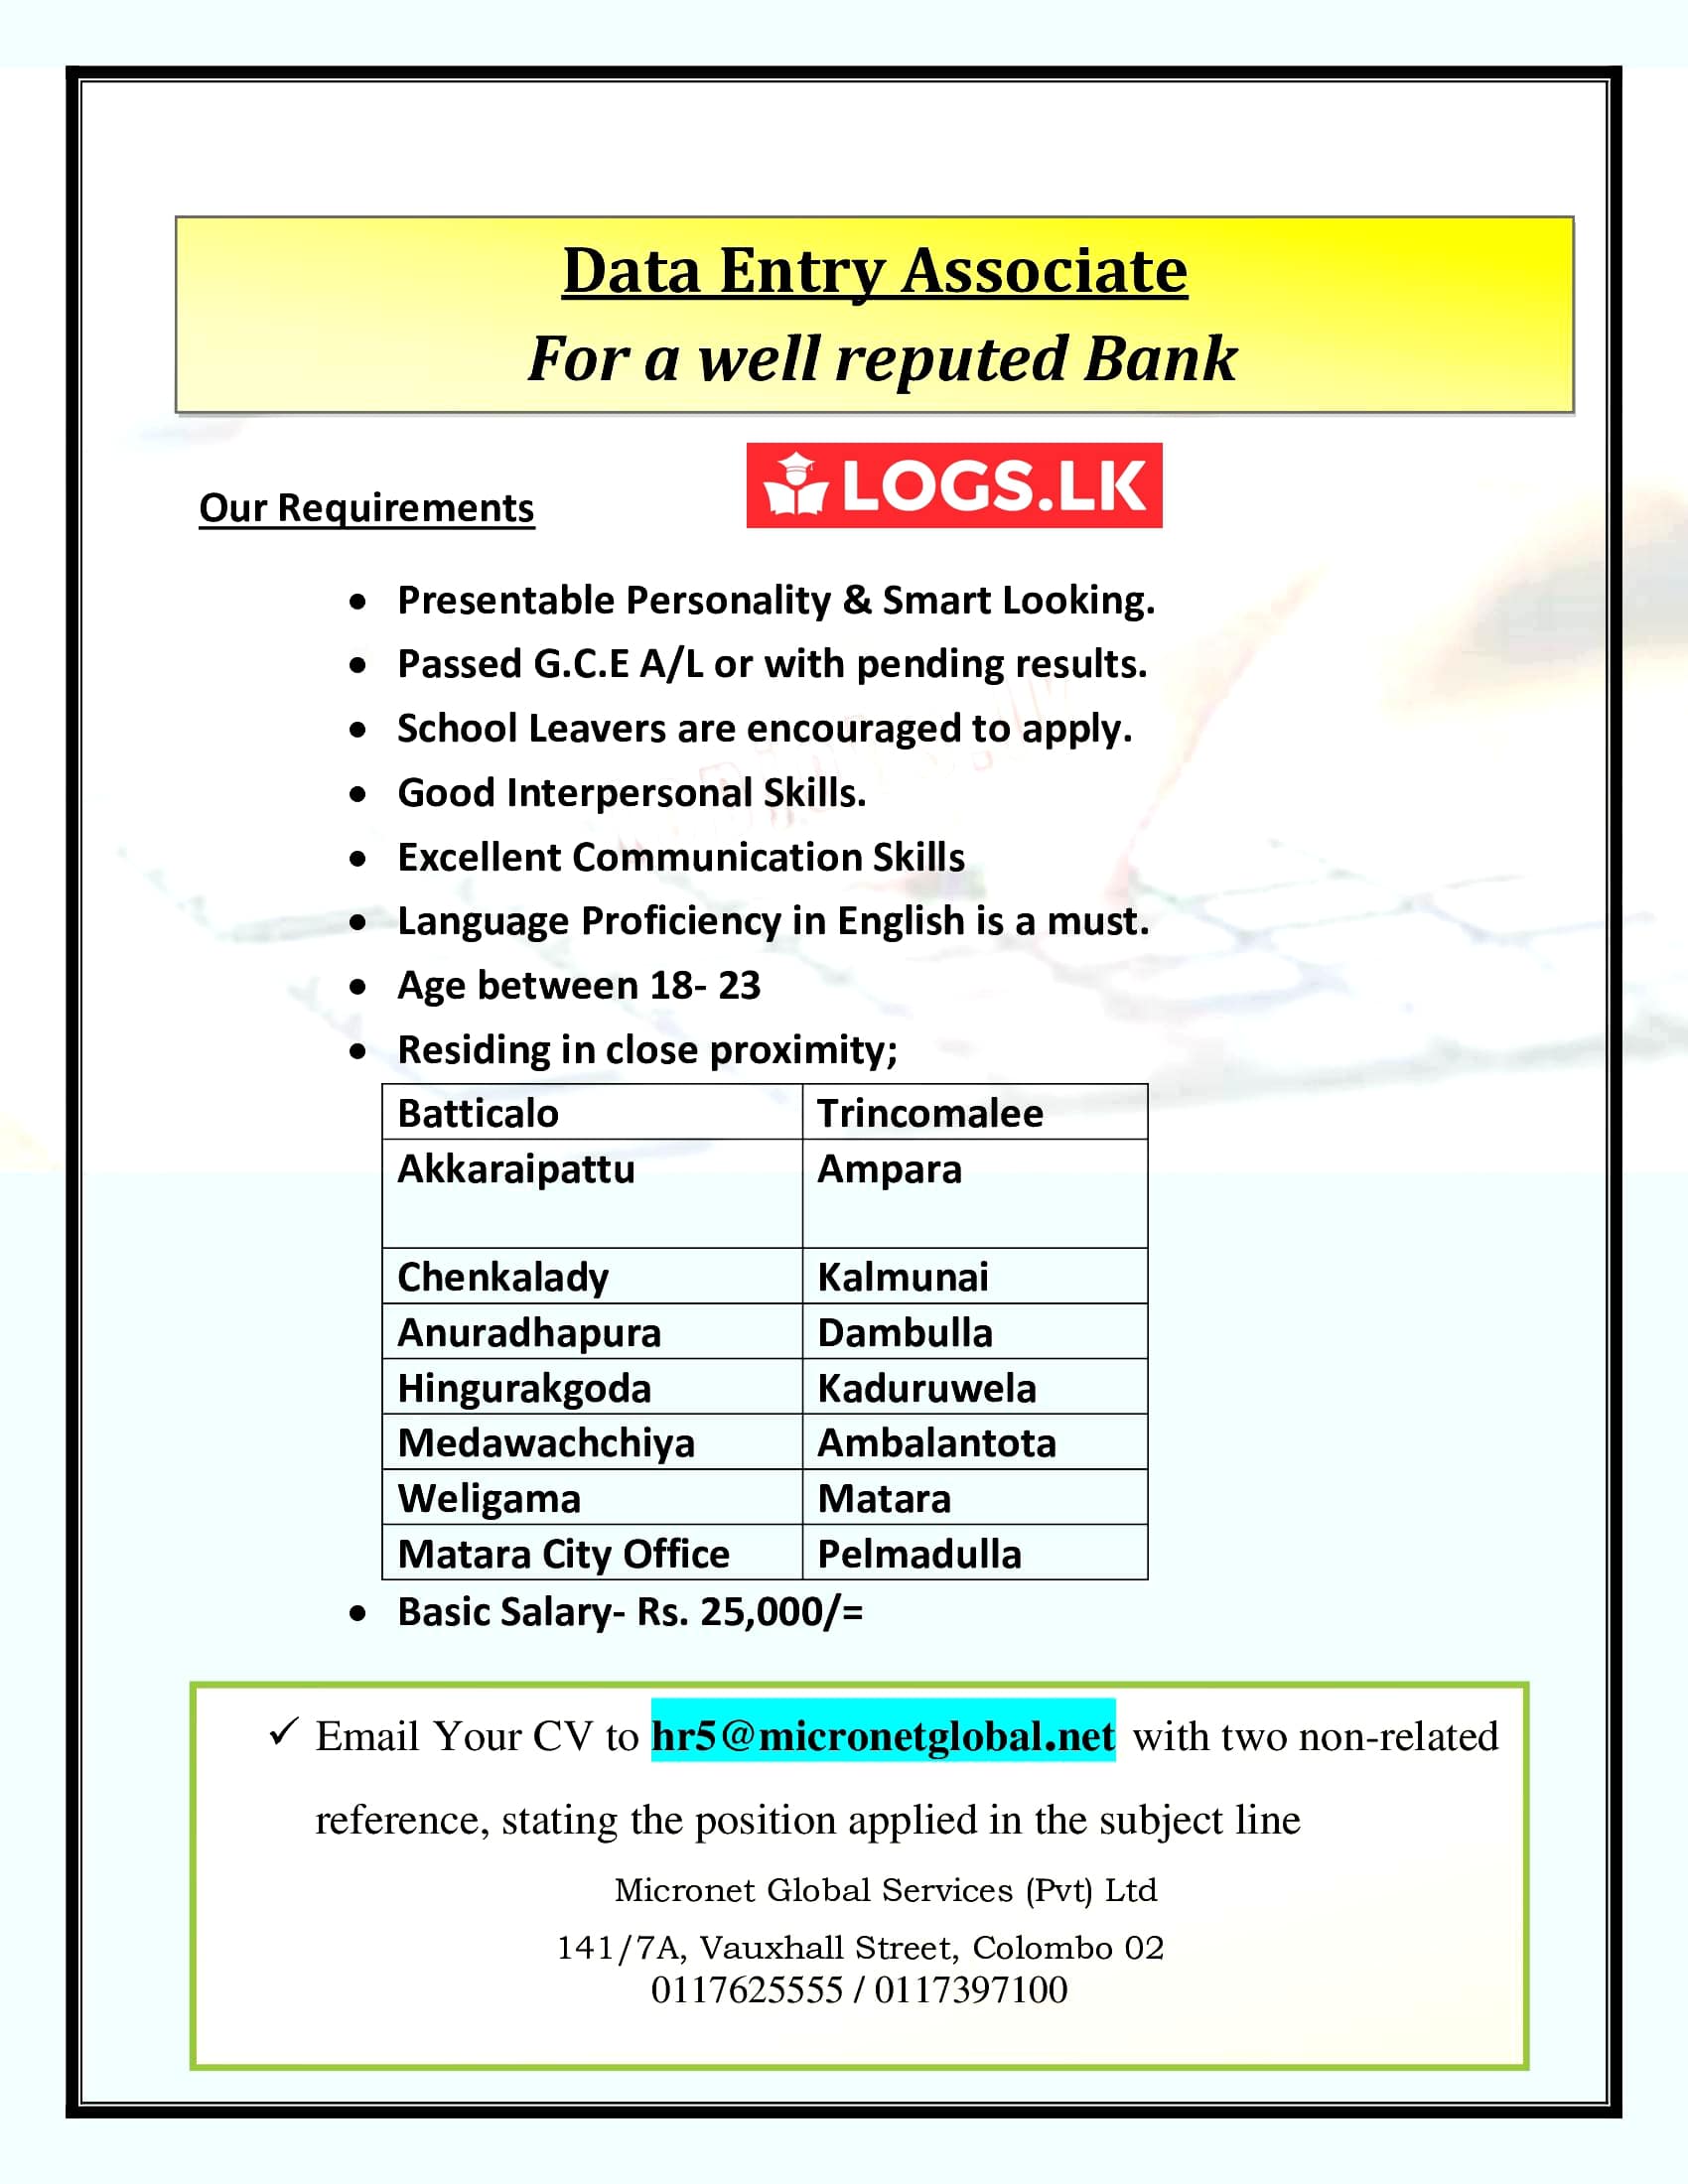 Data Entry Associate Job Vacancy - Micronet Global Services Jobs Vacancies